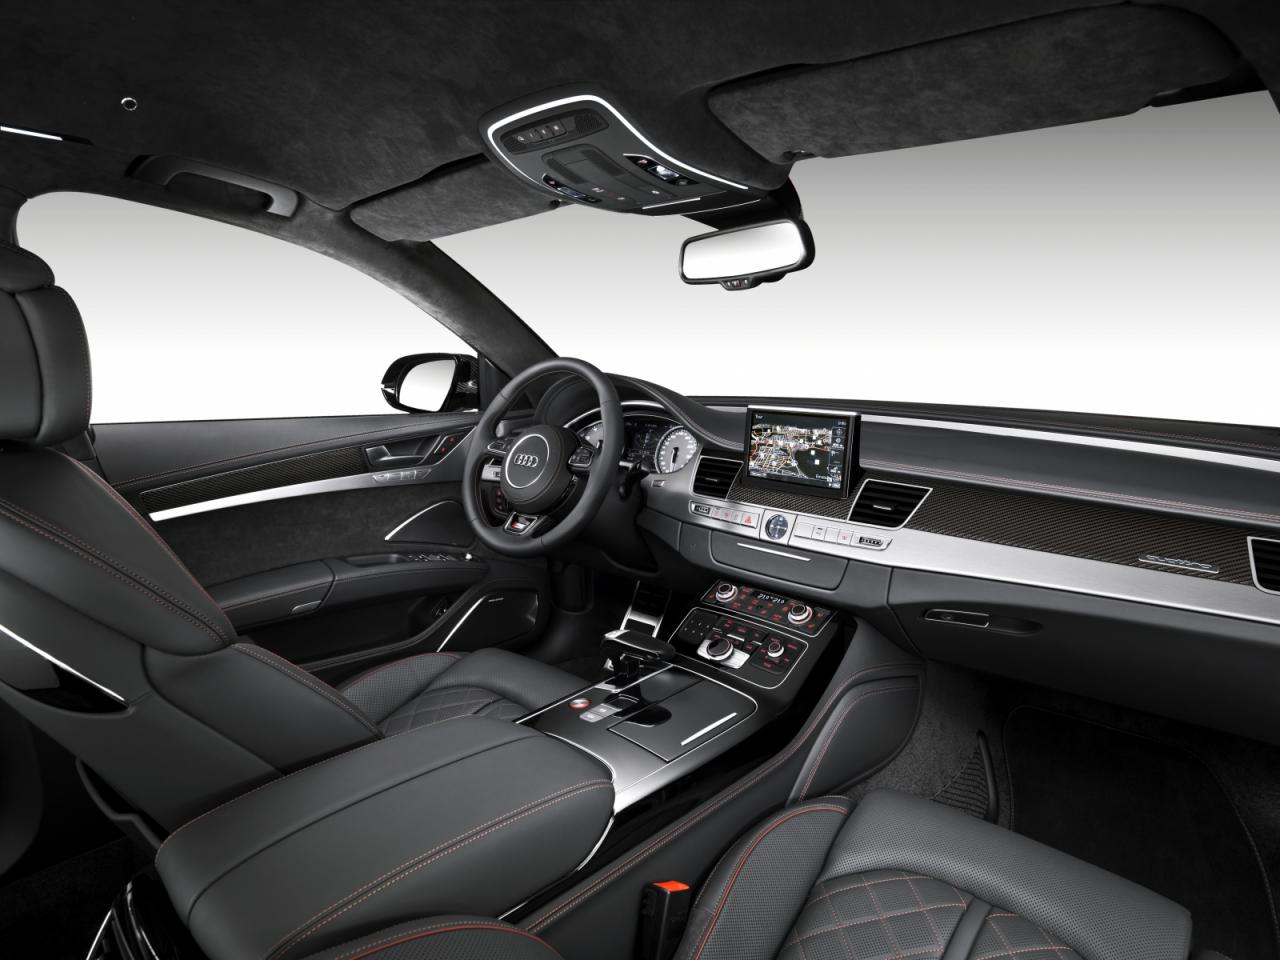 Audi S8 Plus interior dashboard